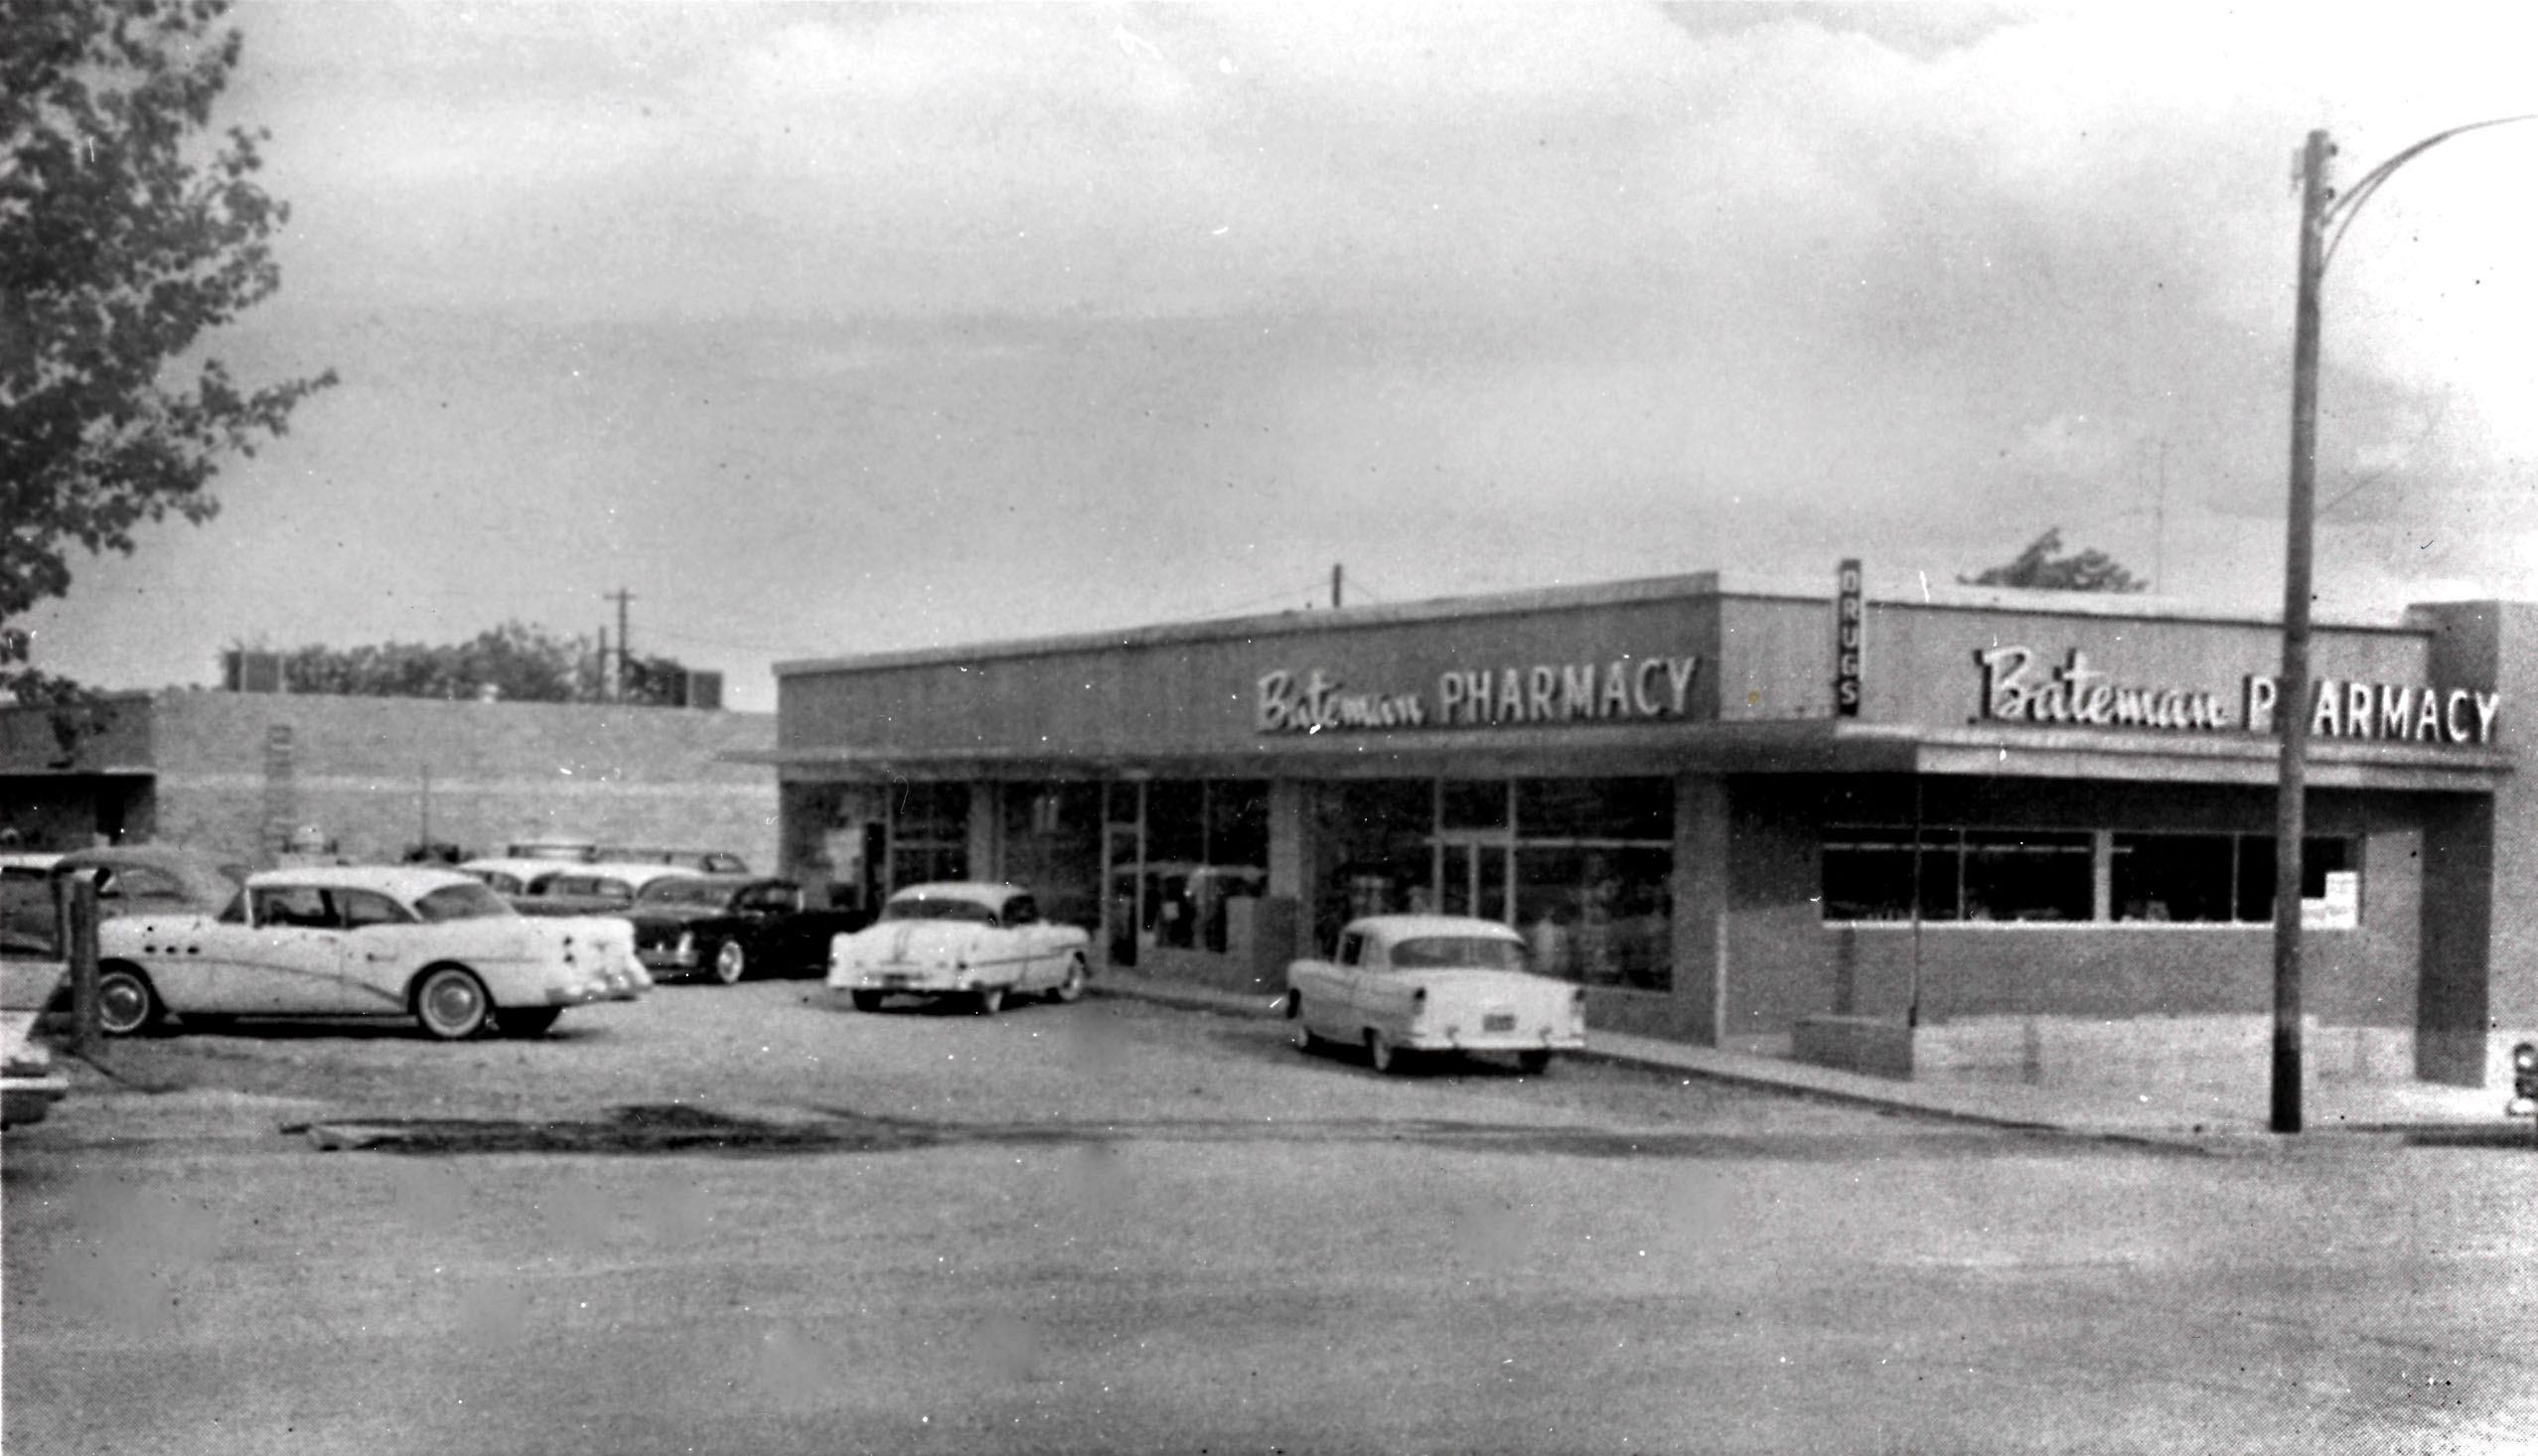 Bateman Pharmacy building